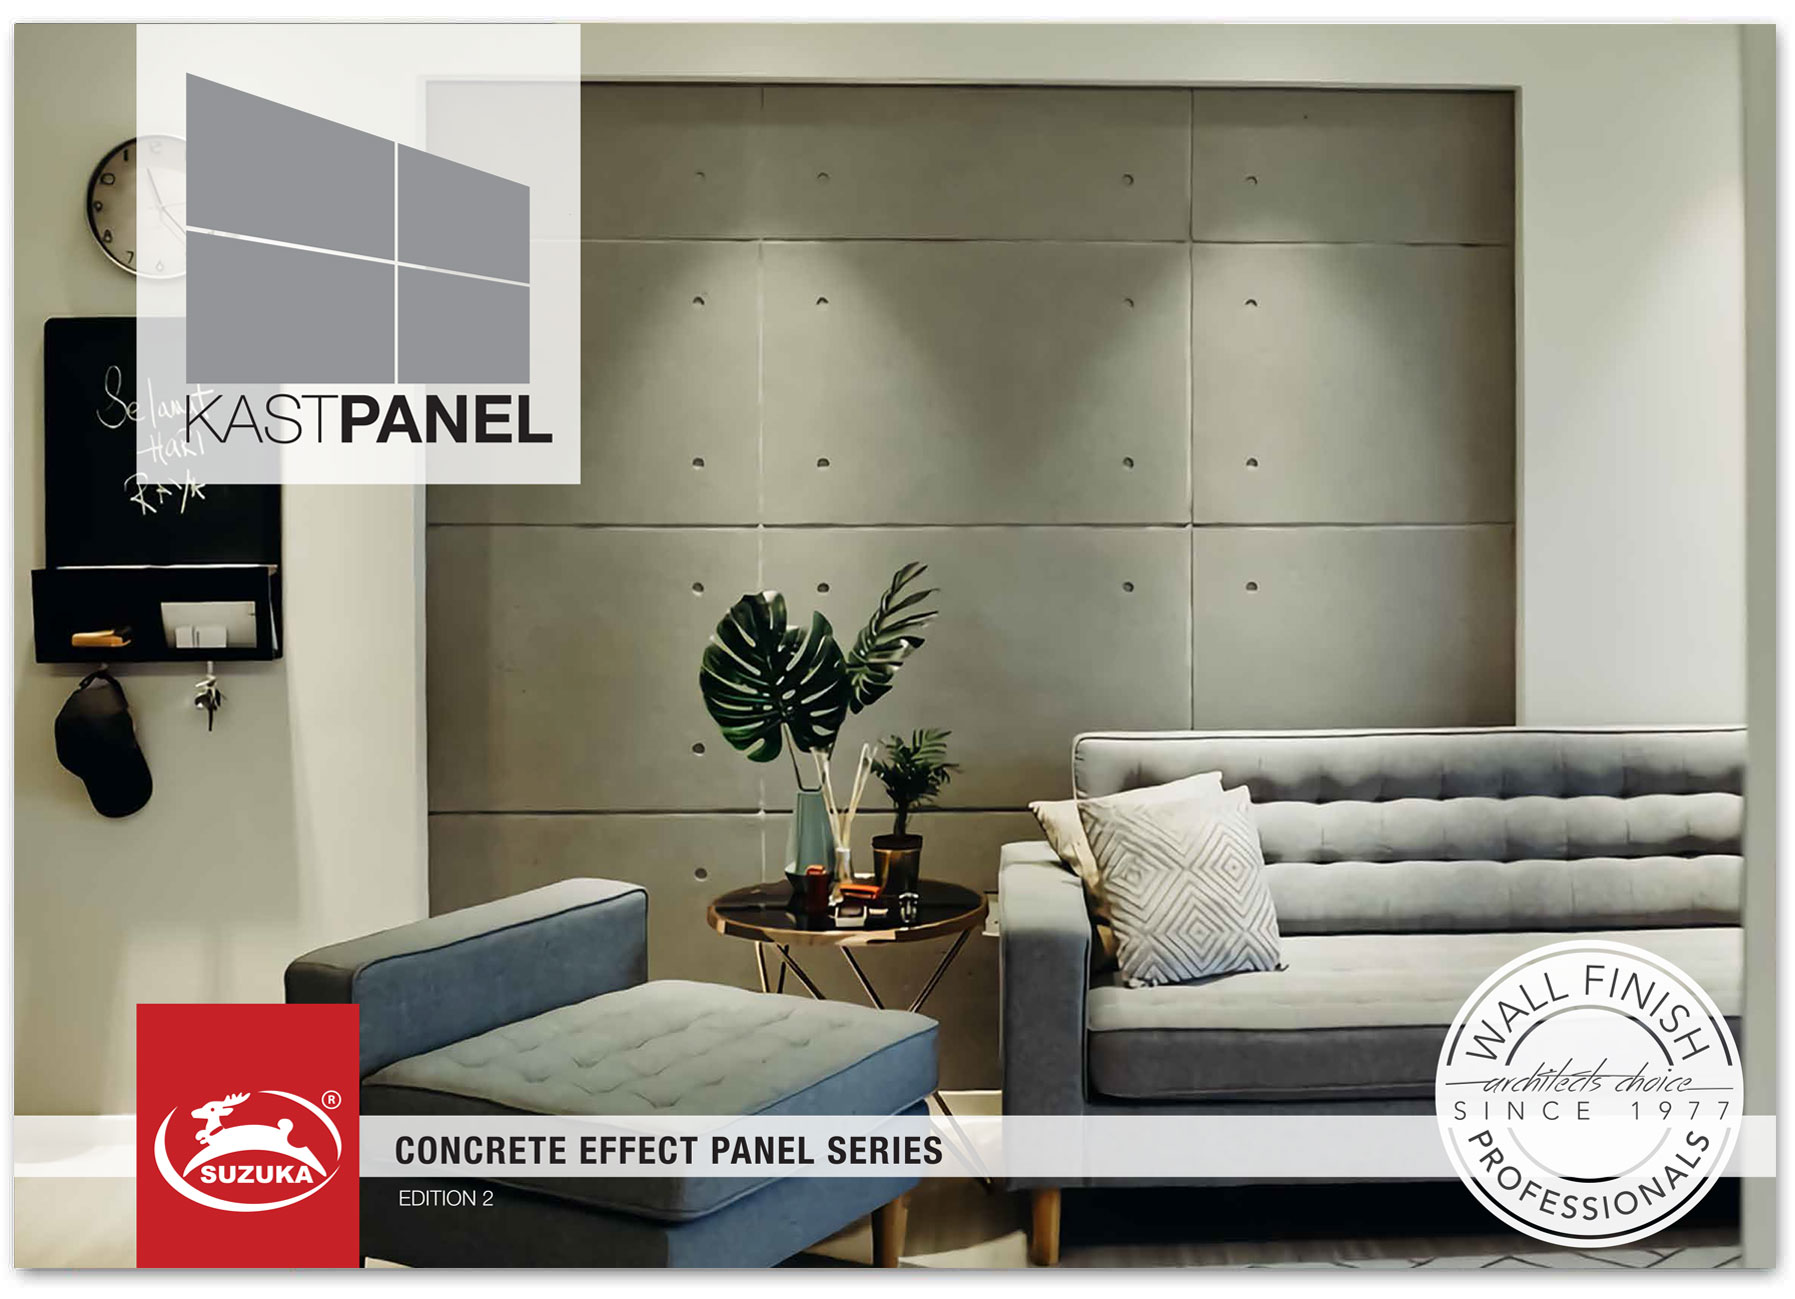 KASTPANEL: Interior Concrete Effect Panel